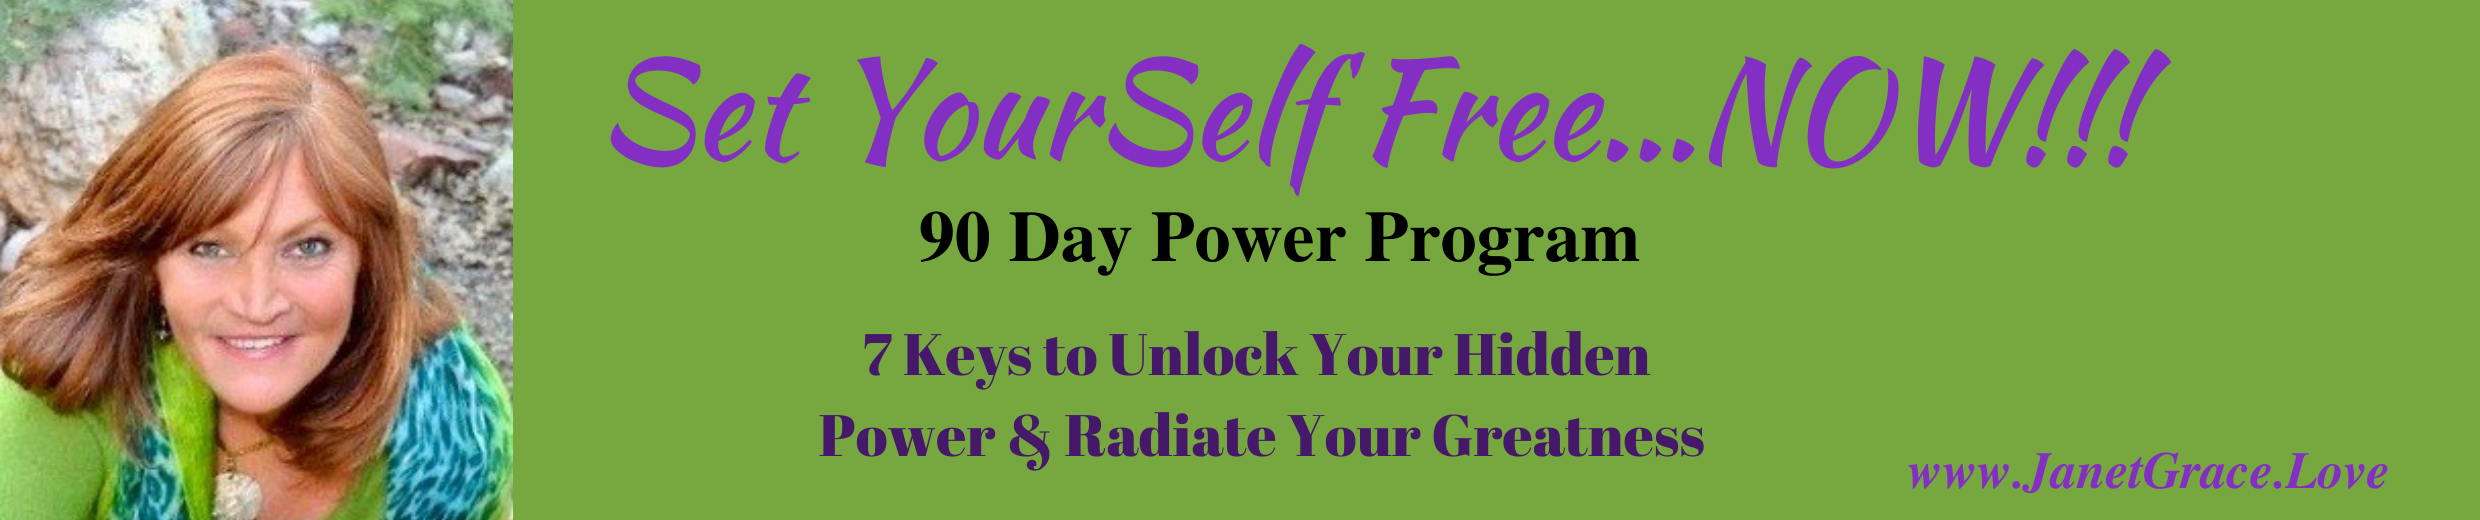 Set Yourself Free 90 Day Program